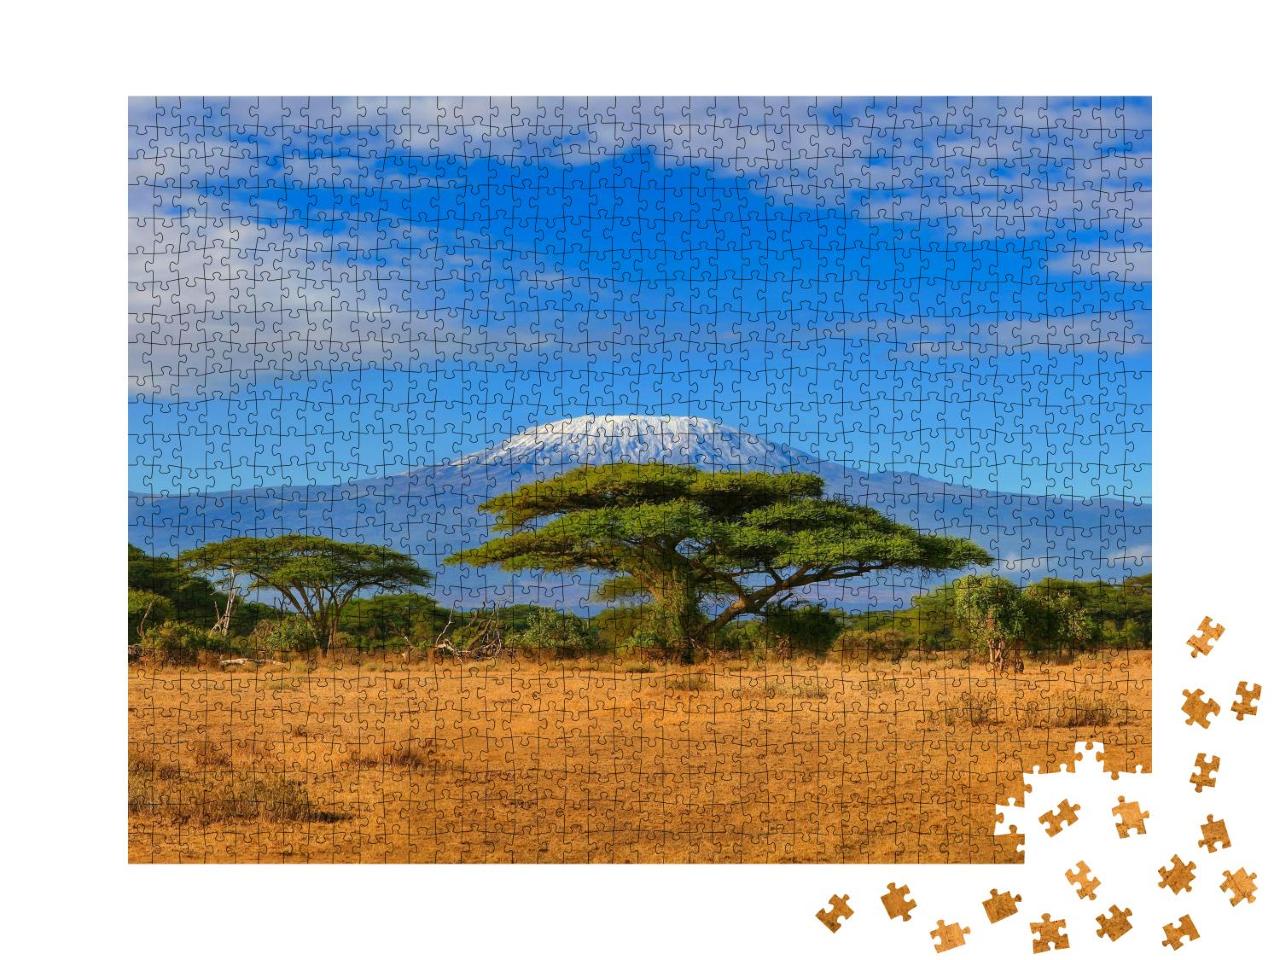 Puzzle 1000 Teile „Kilimandscharo als Ziel der Safari in Kenia, Afrika“